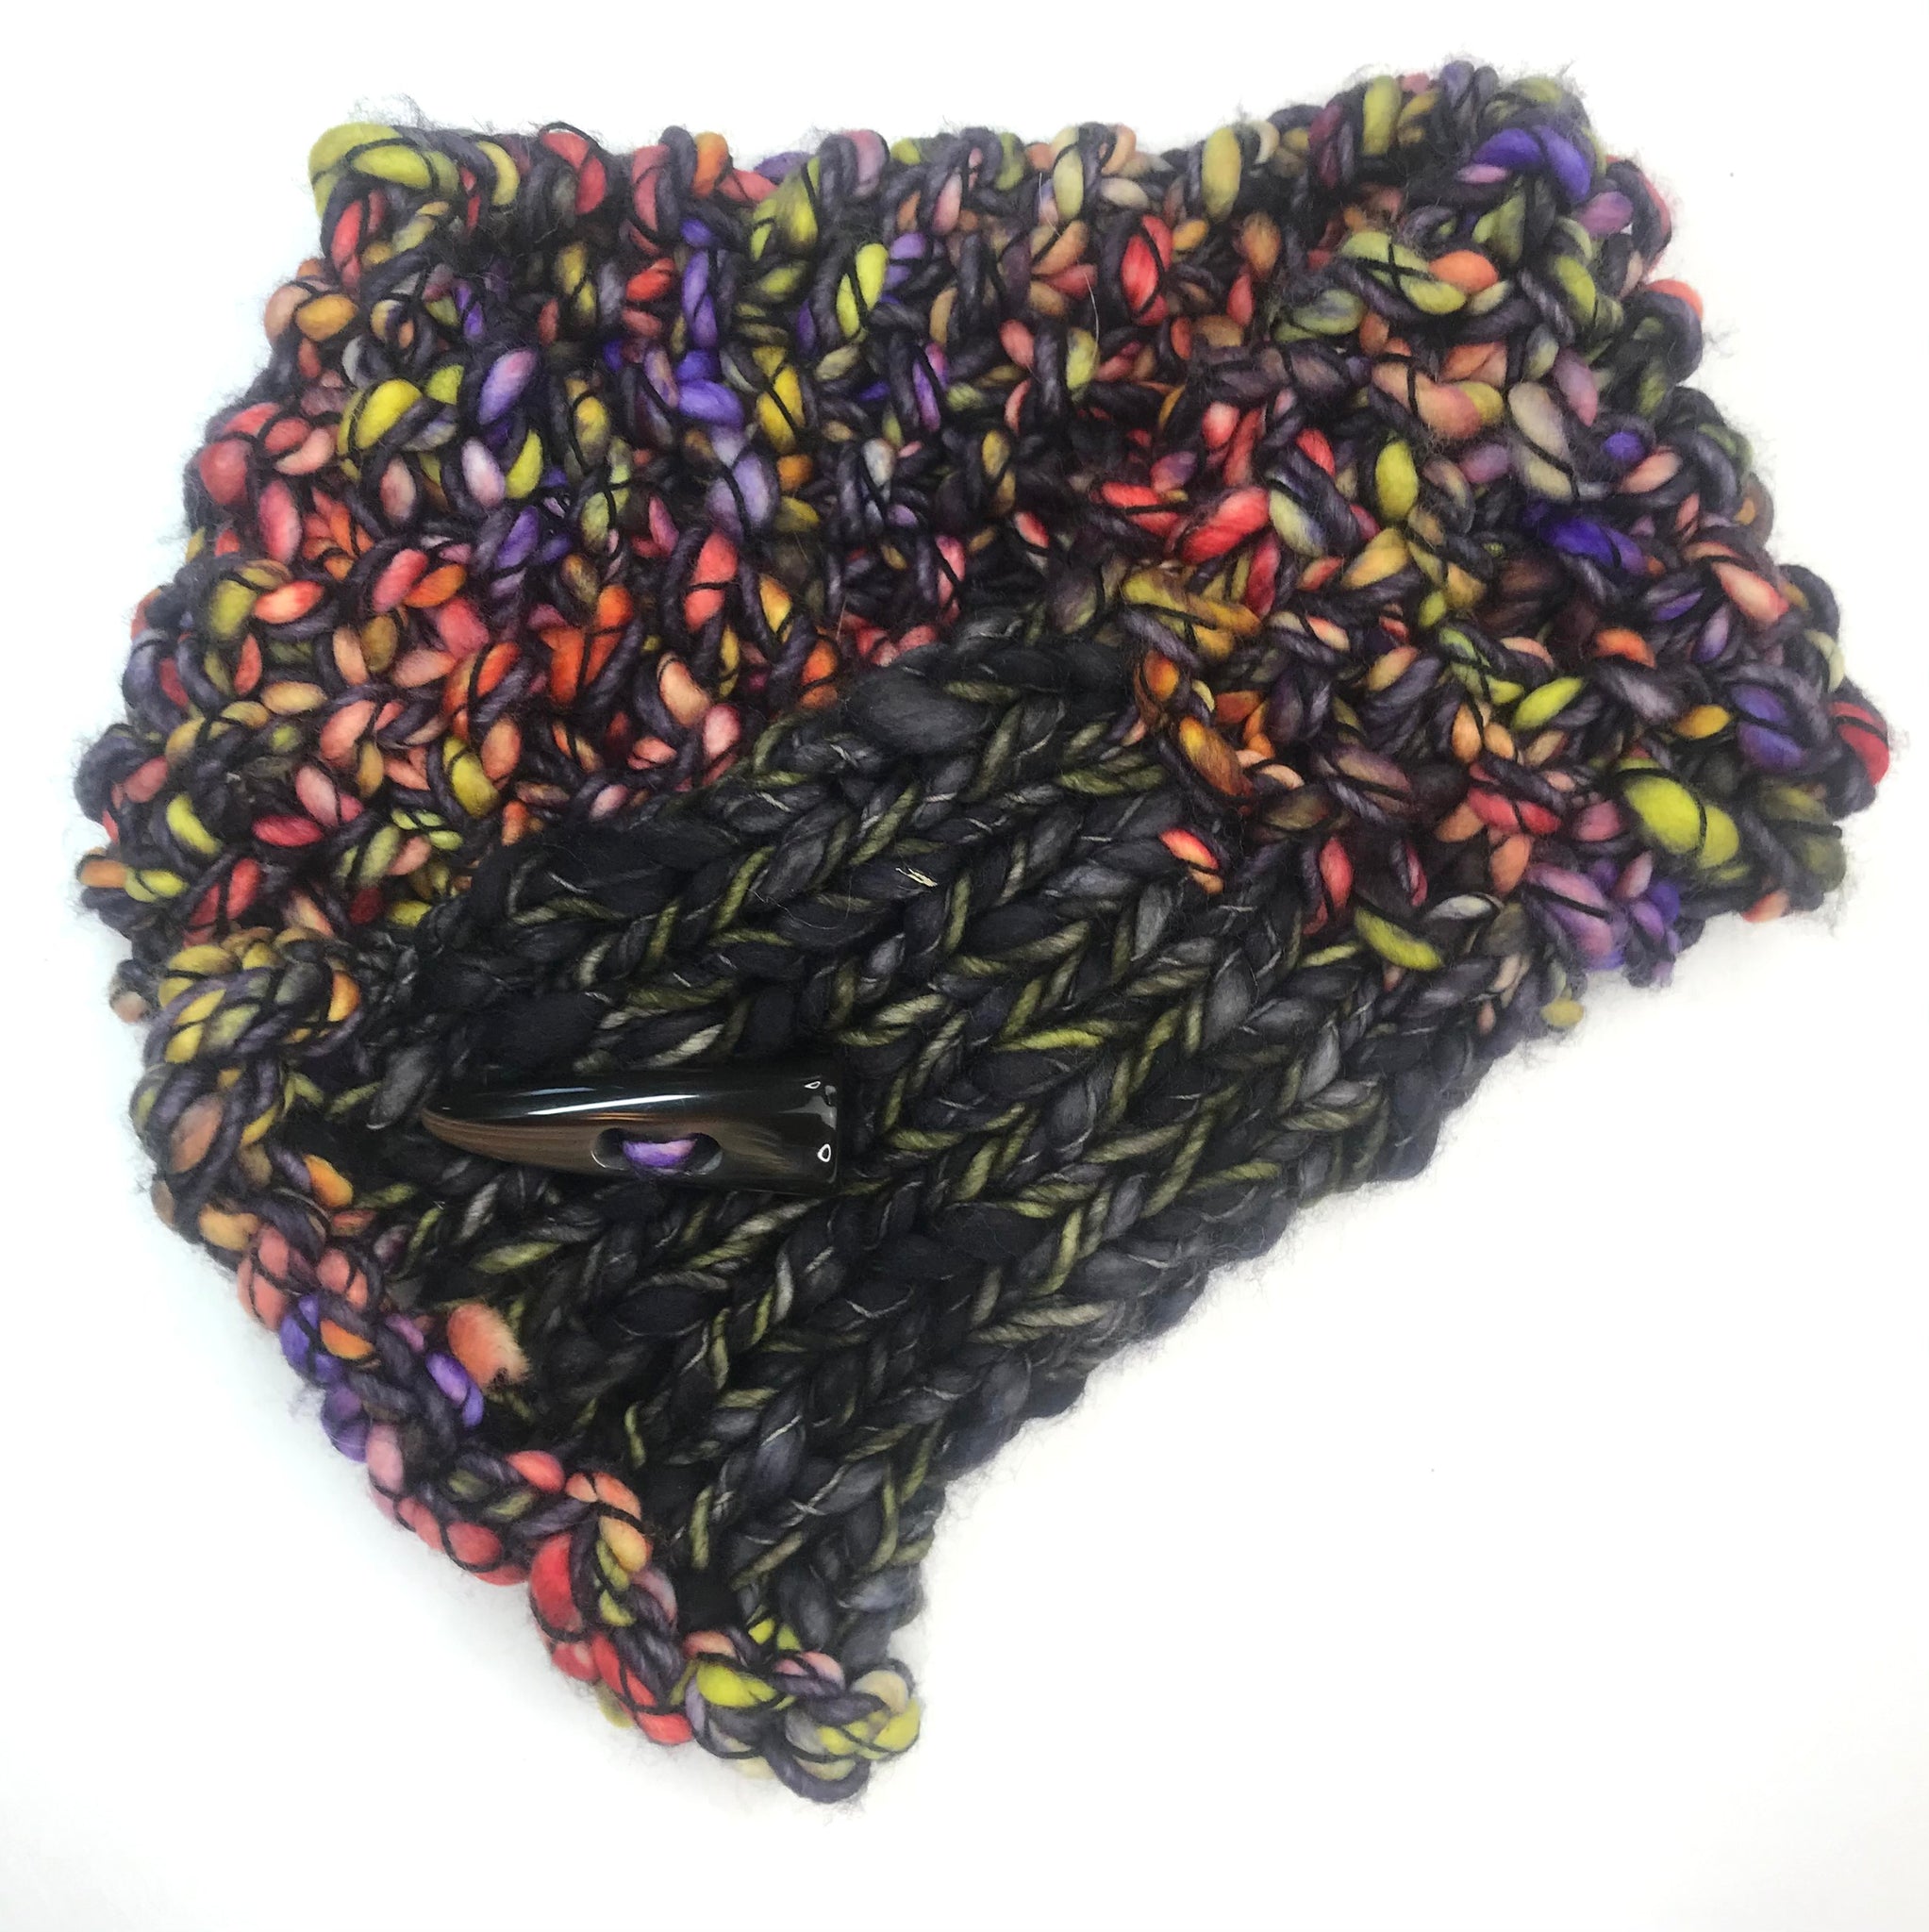 Ruthie Neck Wrap - hand knit Merino wool